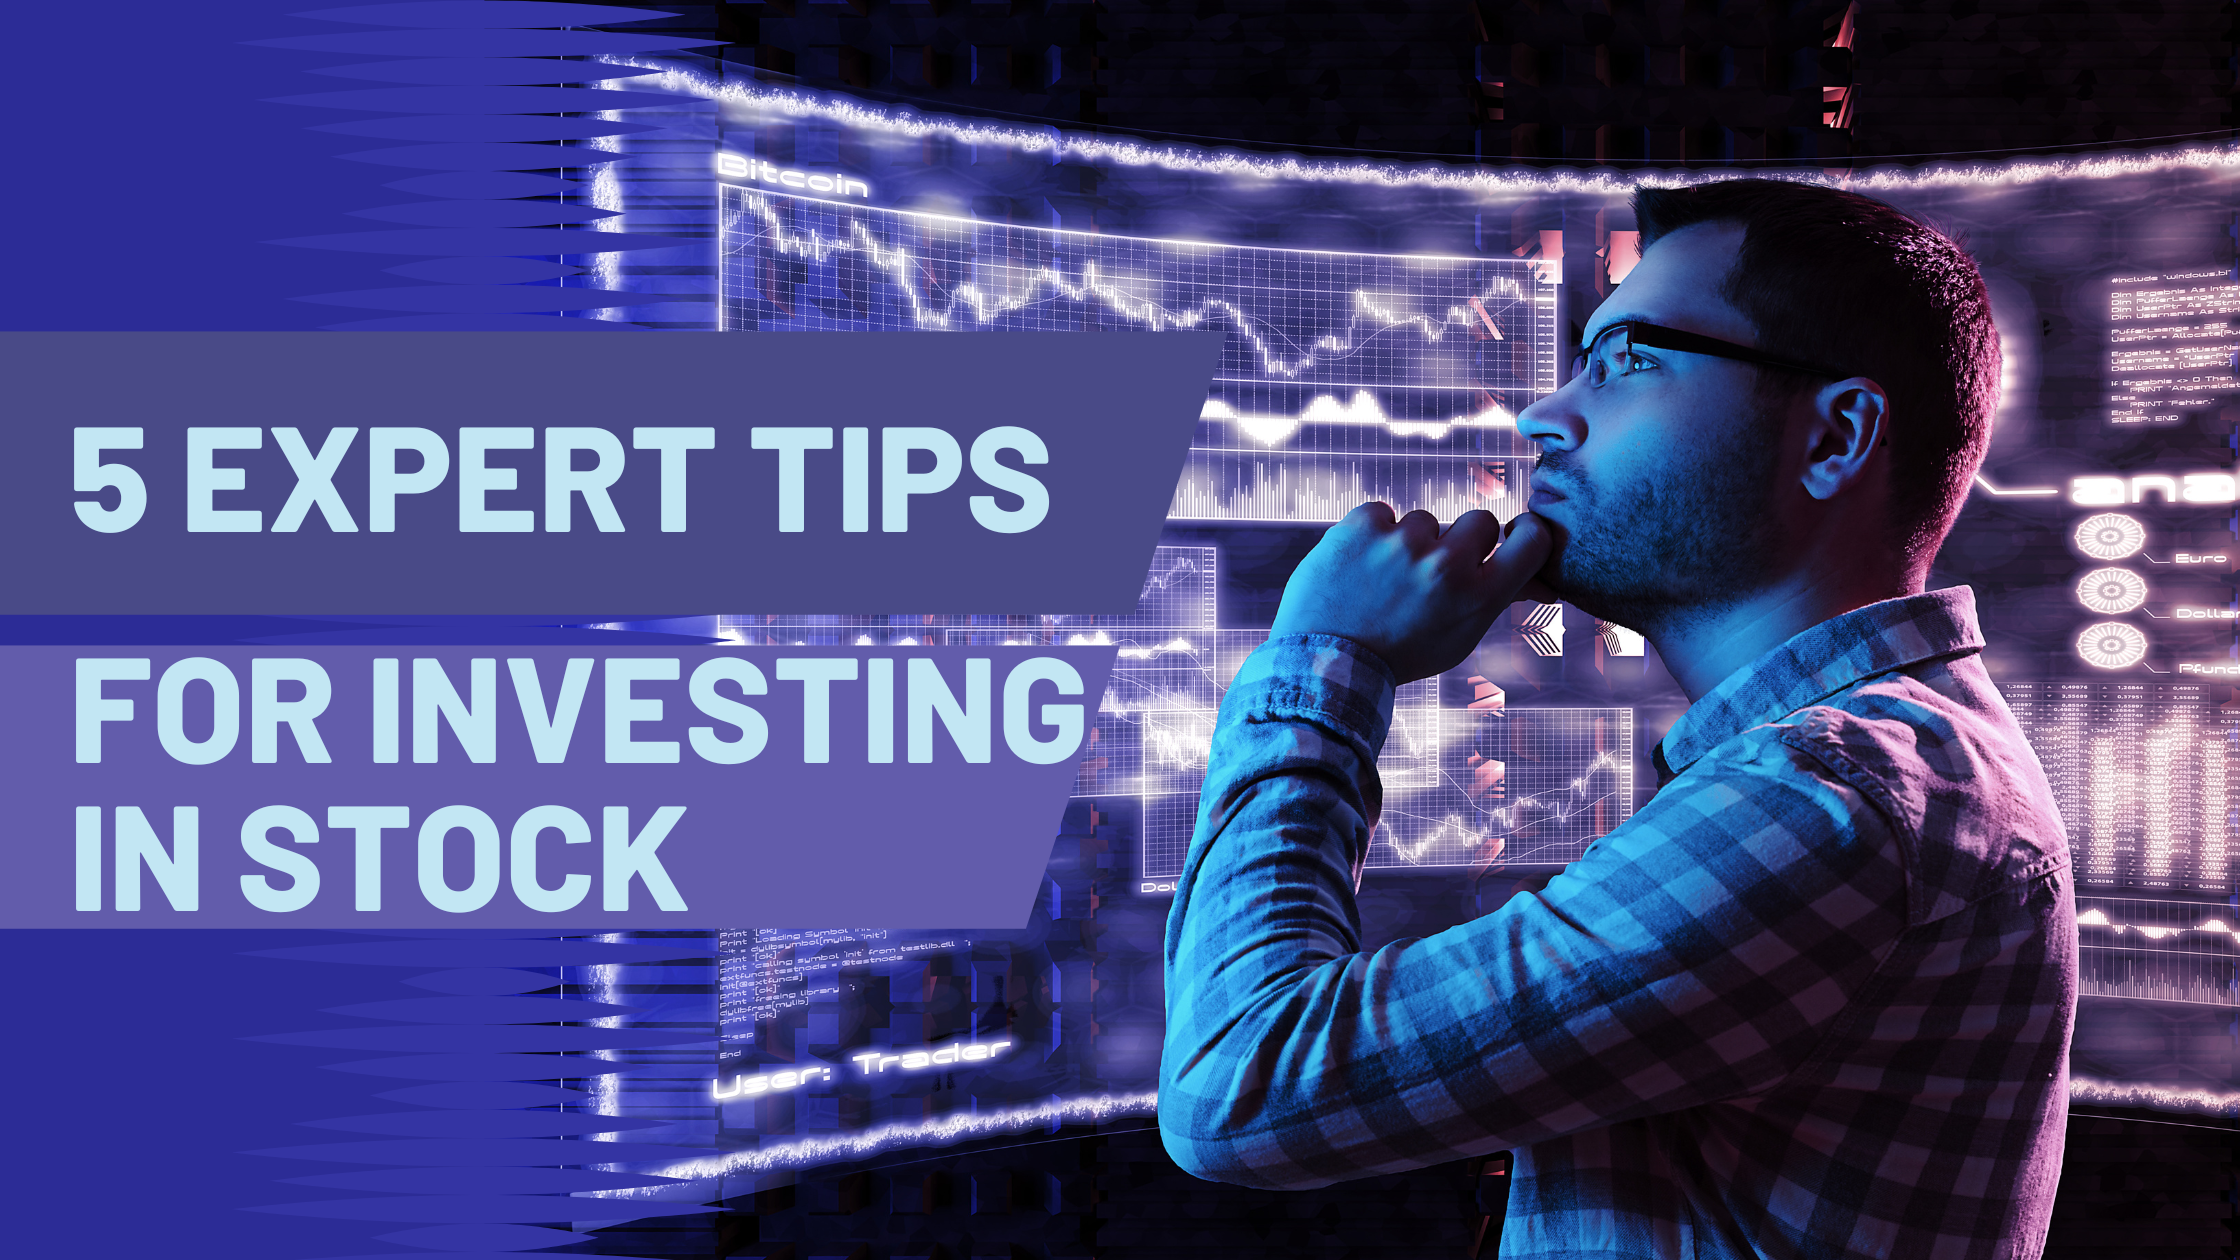 5 expert tips for investing in stock